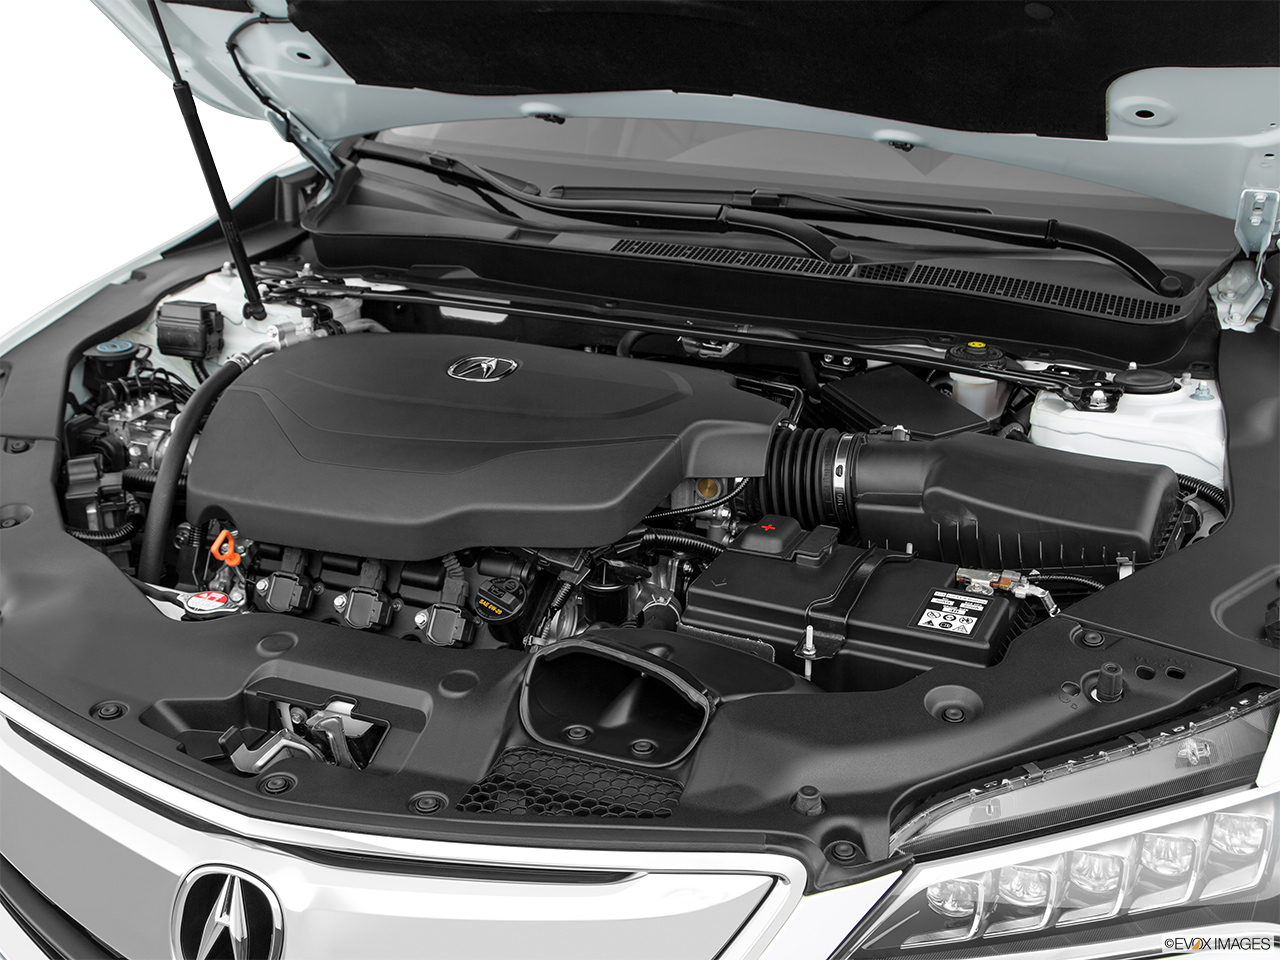 2017 Acura TLX 3.5L Engine. 